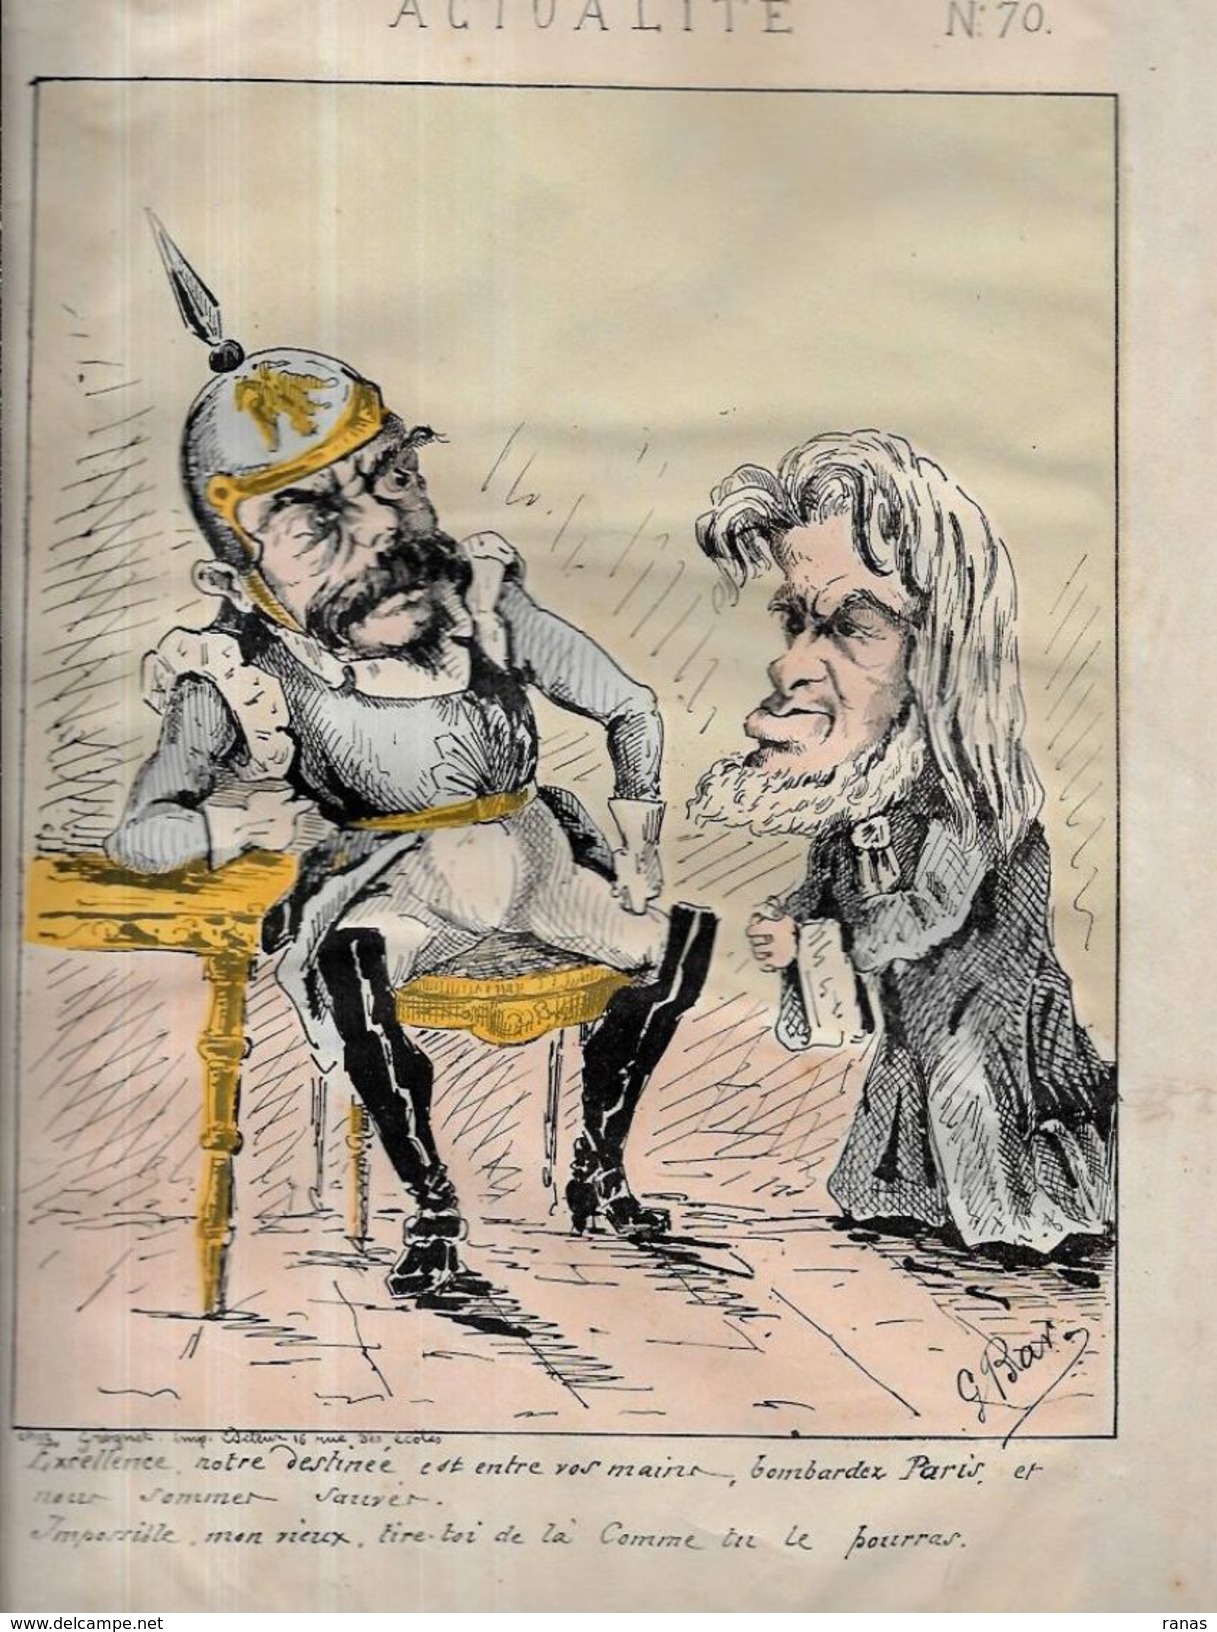 Estampe Gravure Satirique Caricature D'époque 1870 Bismarck Favre - Estampes & Gravures